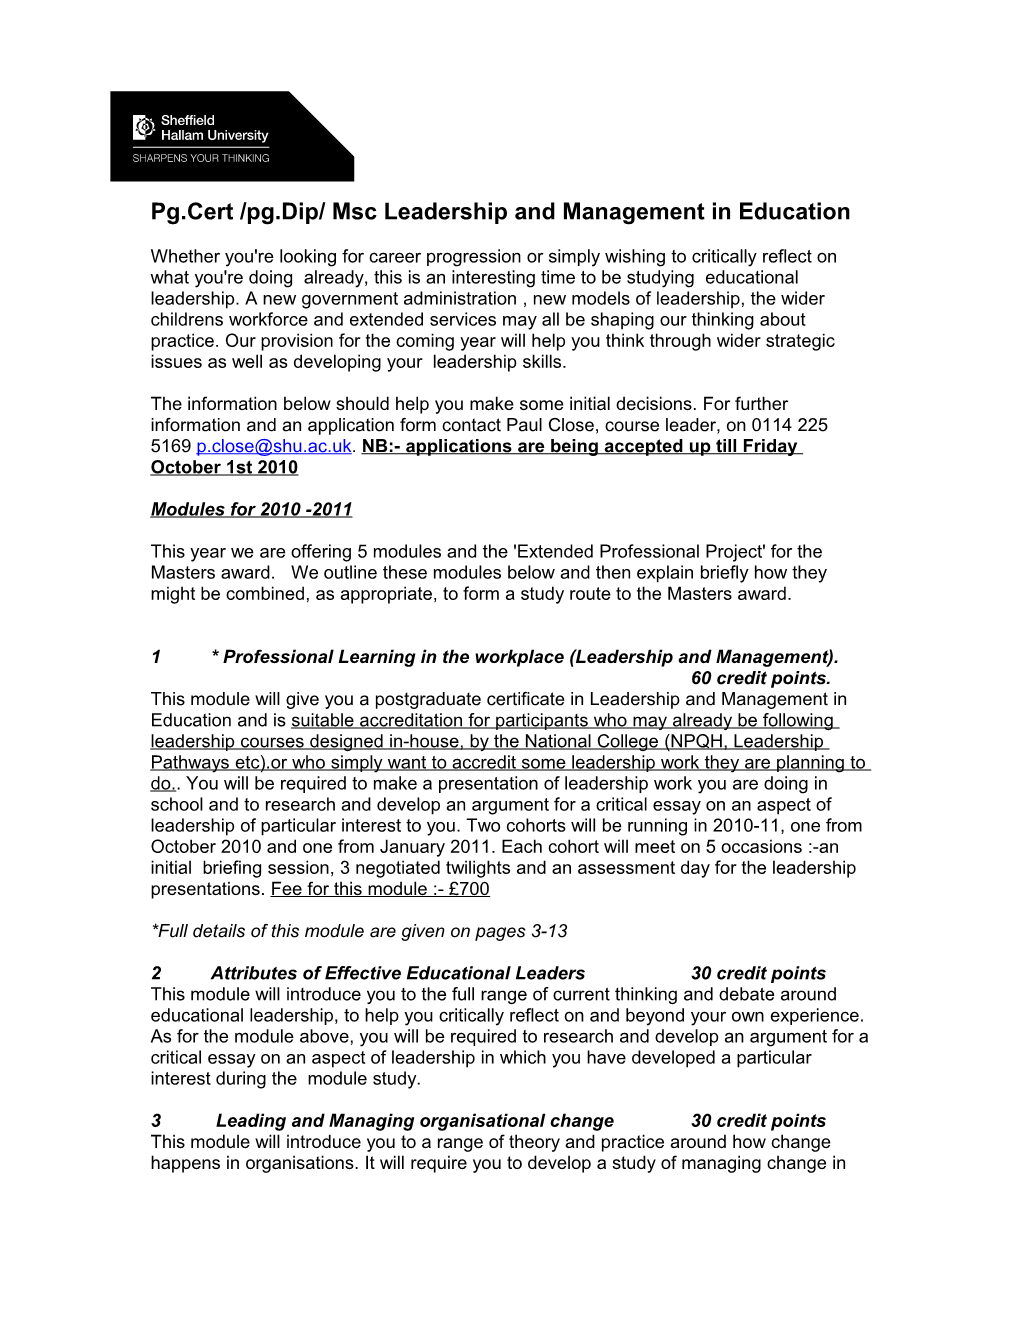 Pg.Cert /Pg.Dip/ Msc Leadership and Management in Education